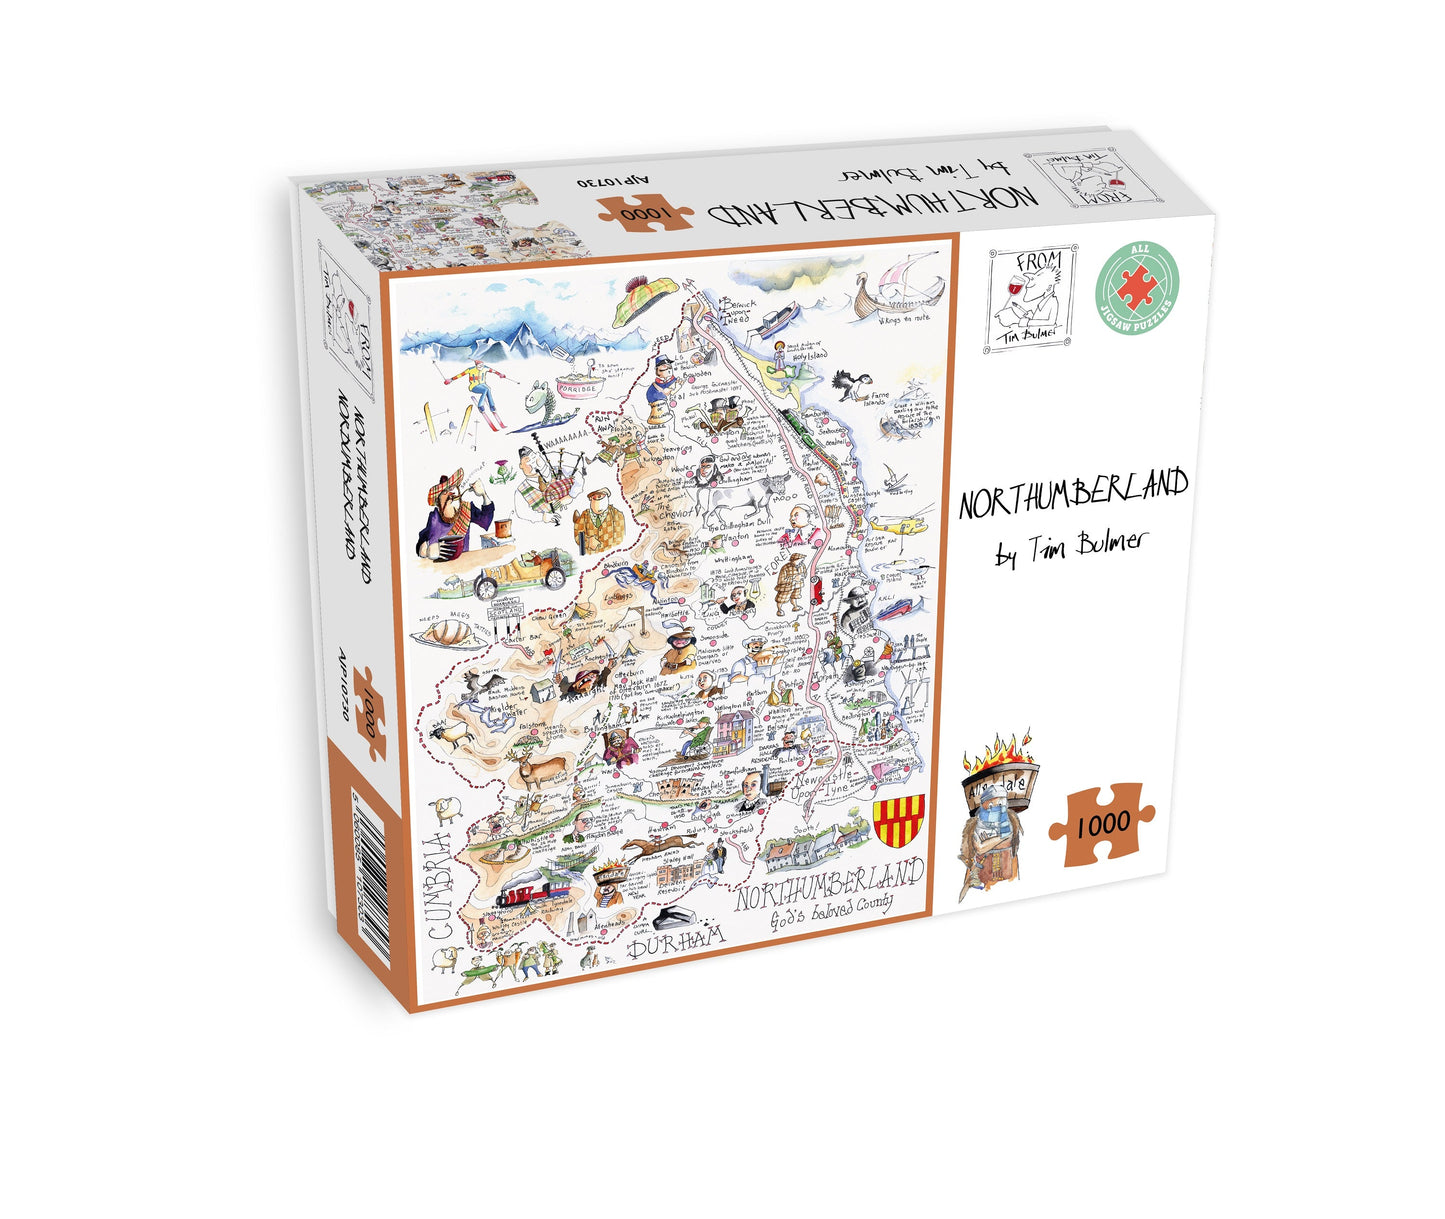 Northumberland - Tim Bulmer 1000 piece Jigsaw box